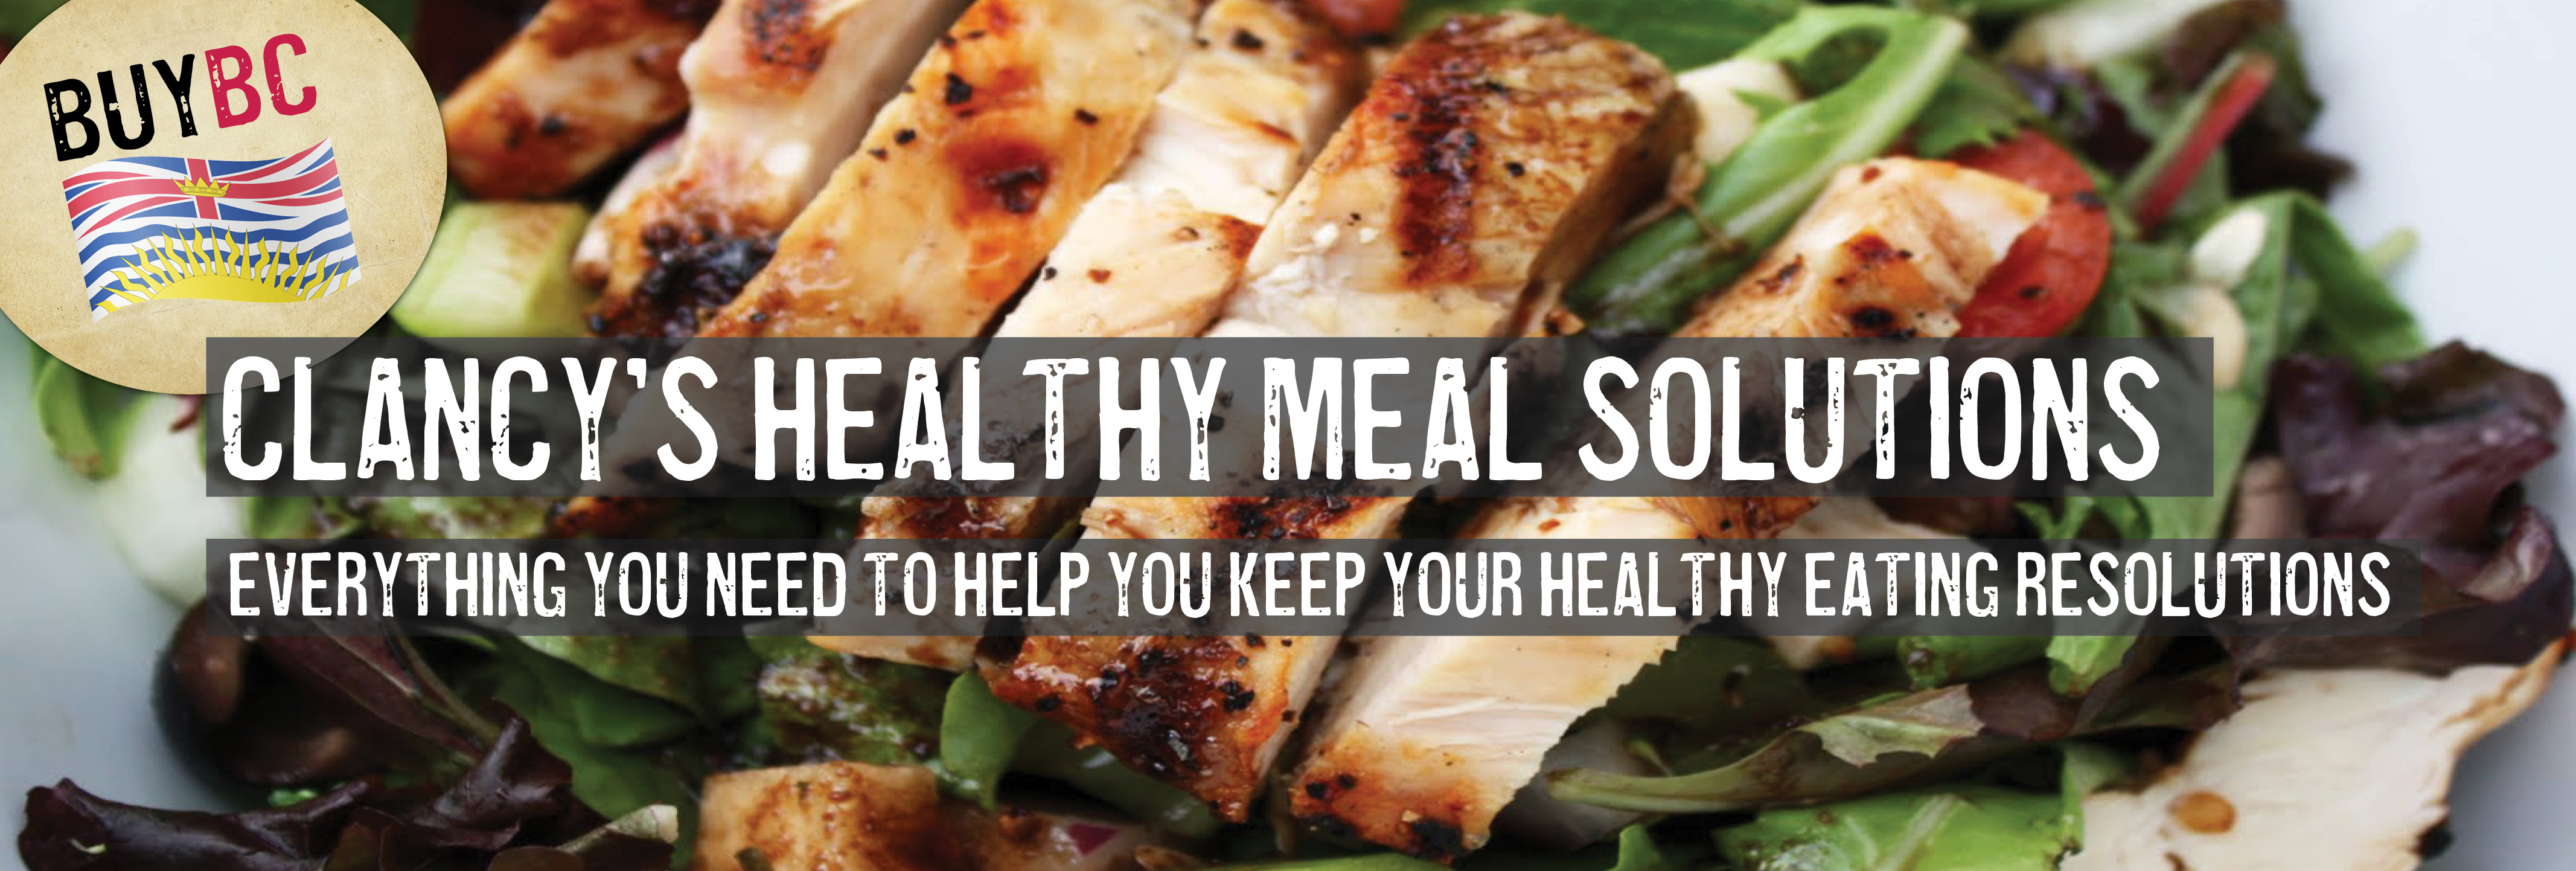 healthy meal solutions.jpg